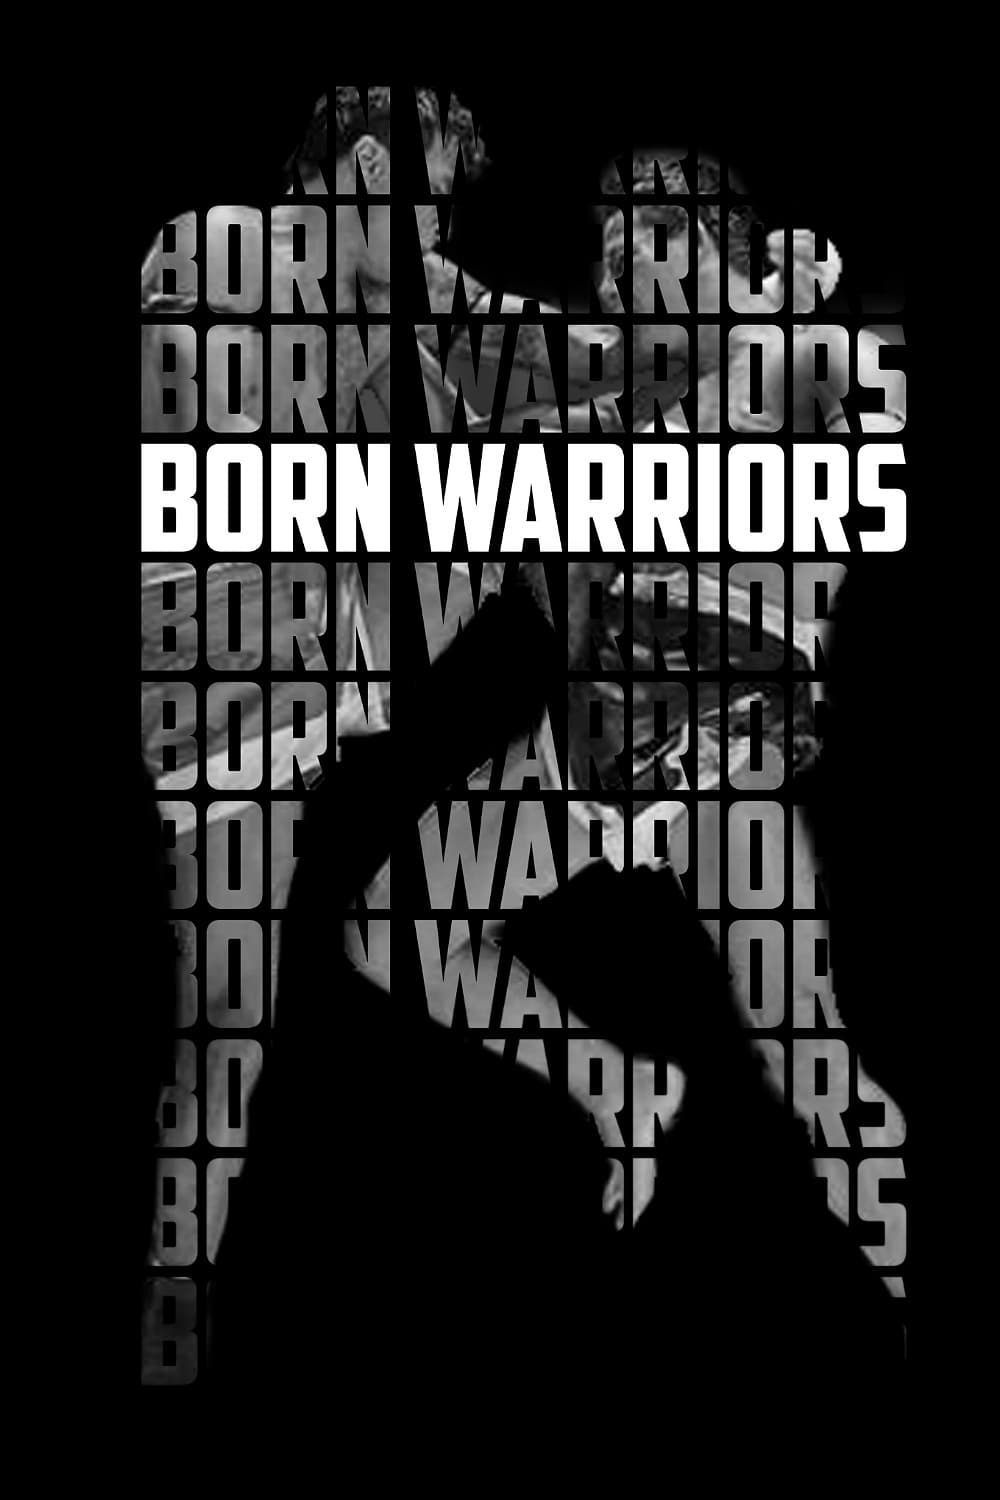 Born Warriors